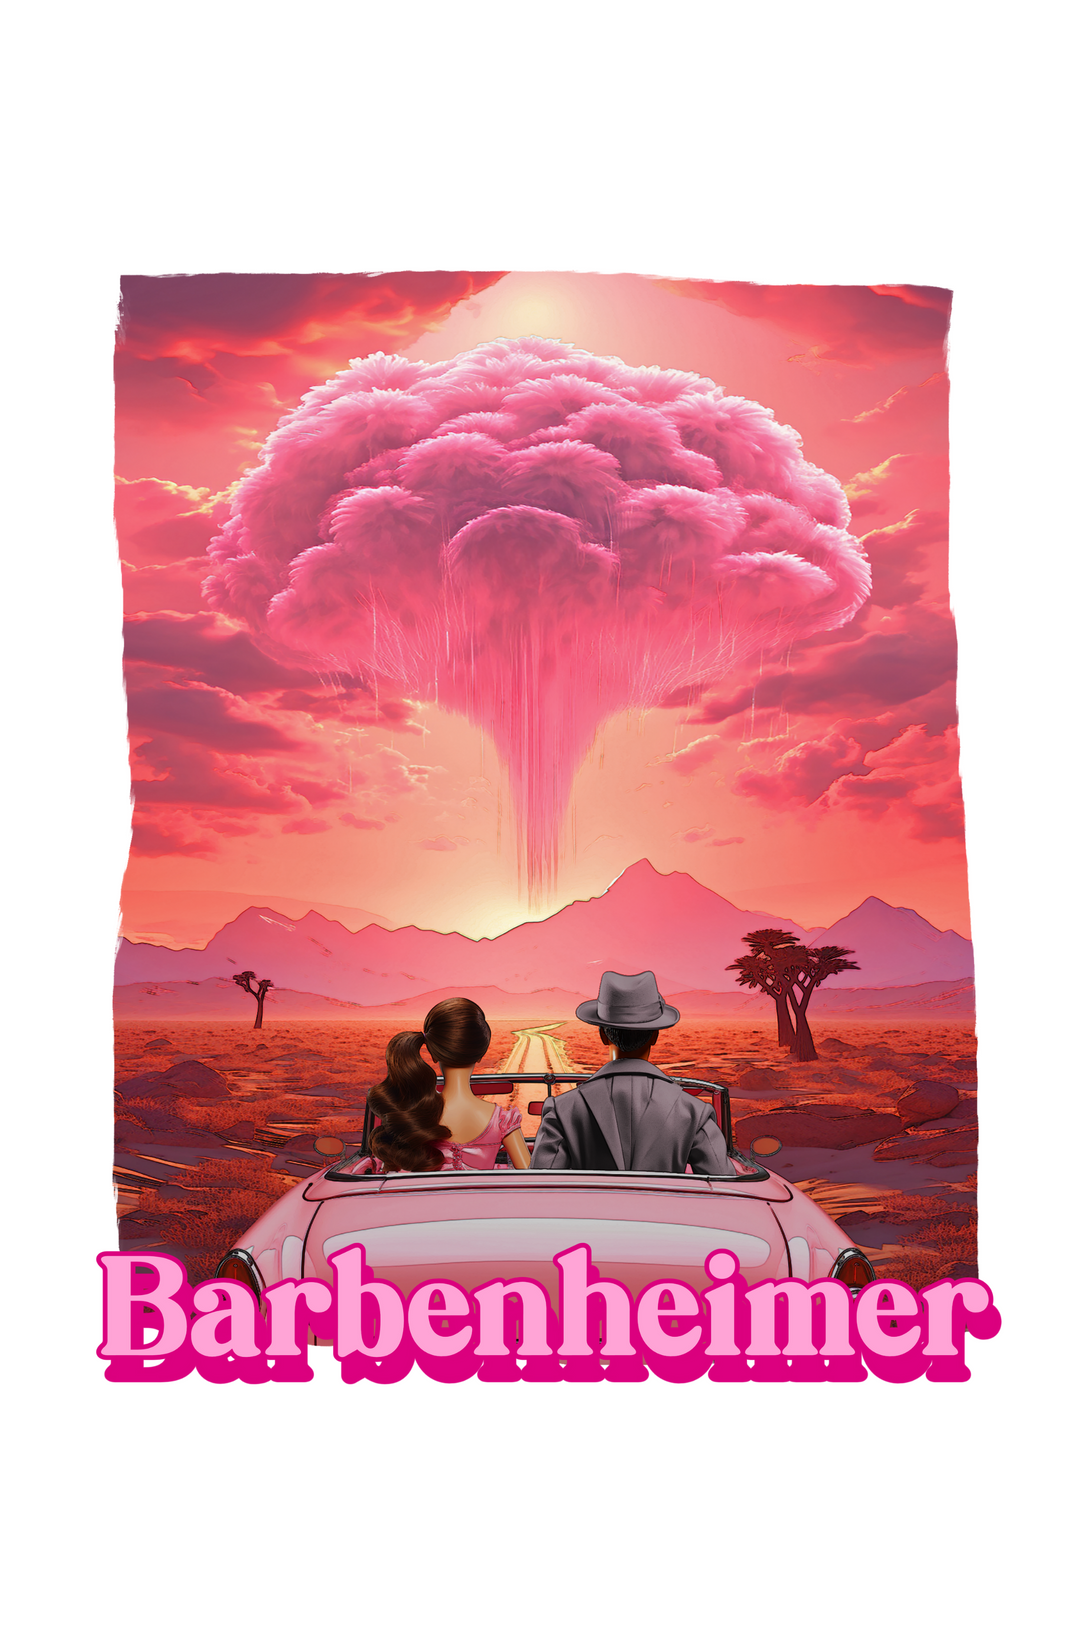 Barbienheimer Printed T-Shirt For Women - WowWaves - 1